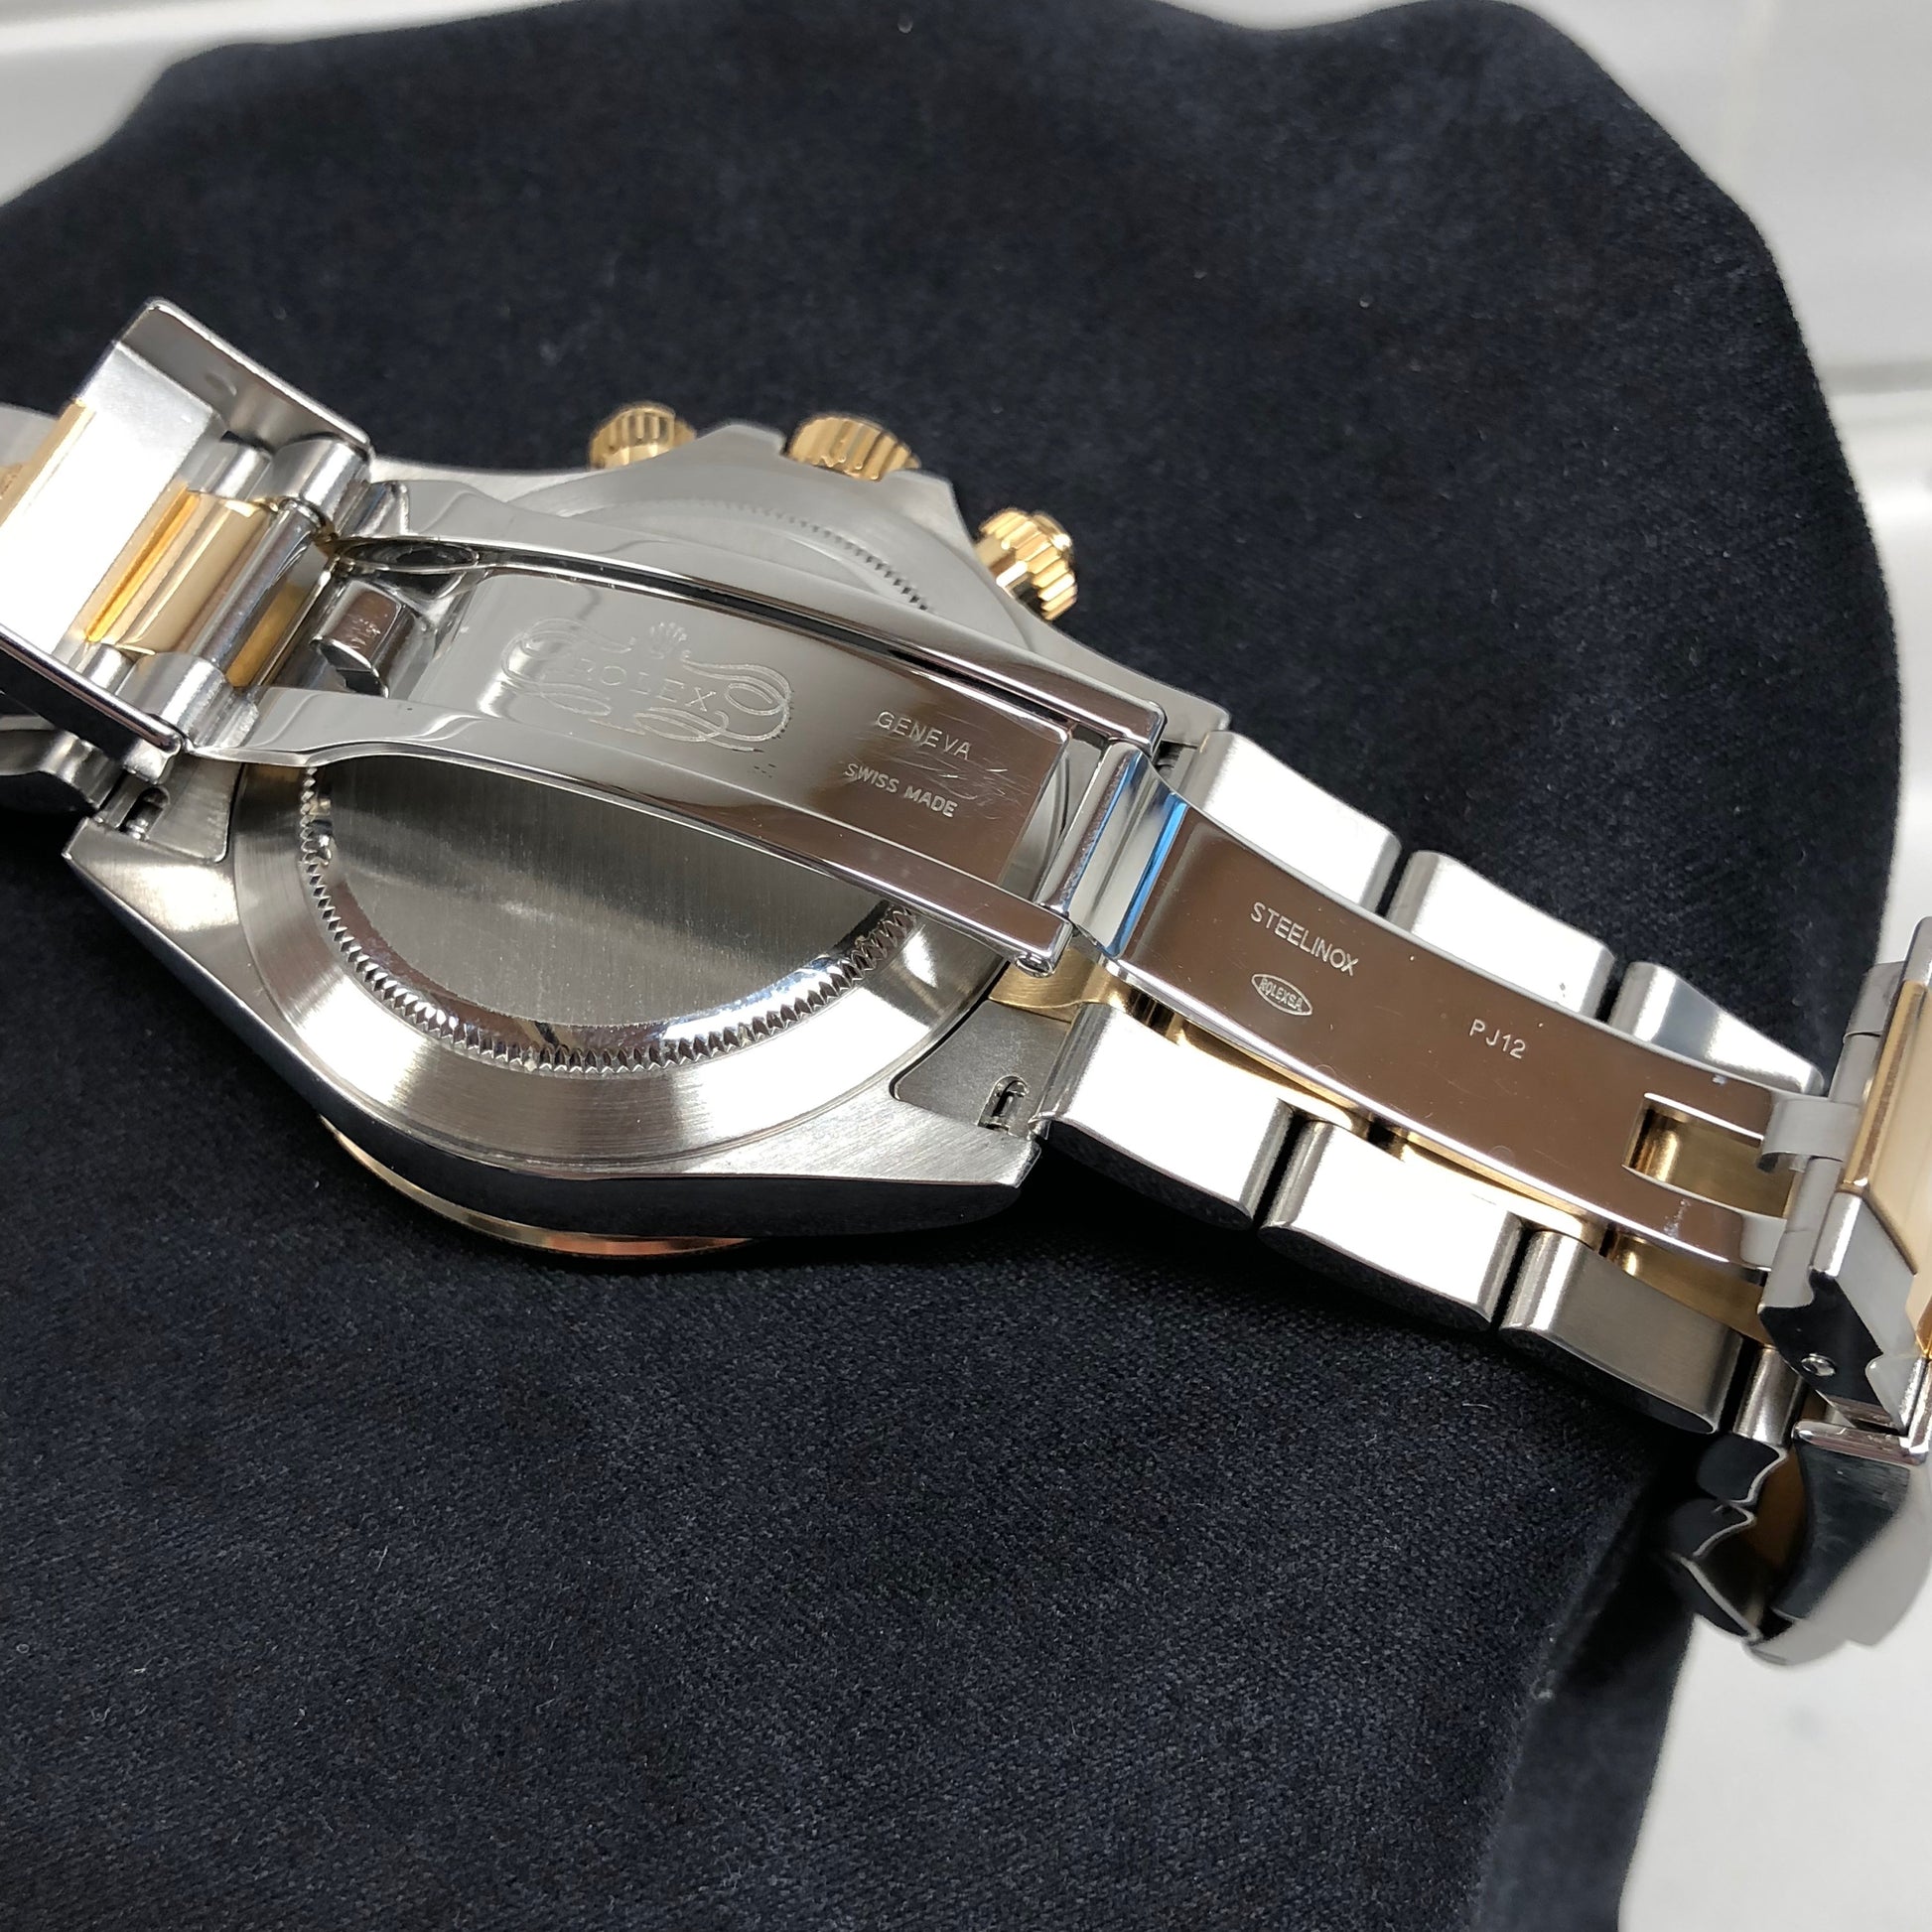 Rolex Daytona 116523 MOP Diamond Two Tone Steel Gold Automatic Caliber 4130 Wristwatch - Hashtag Watch Company